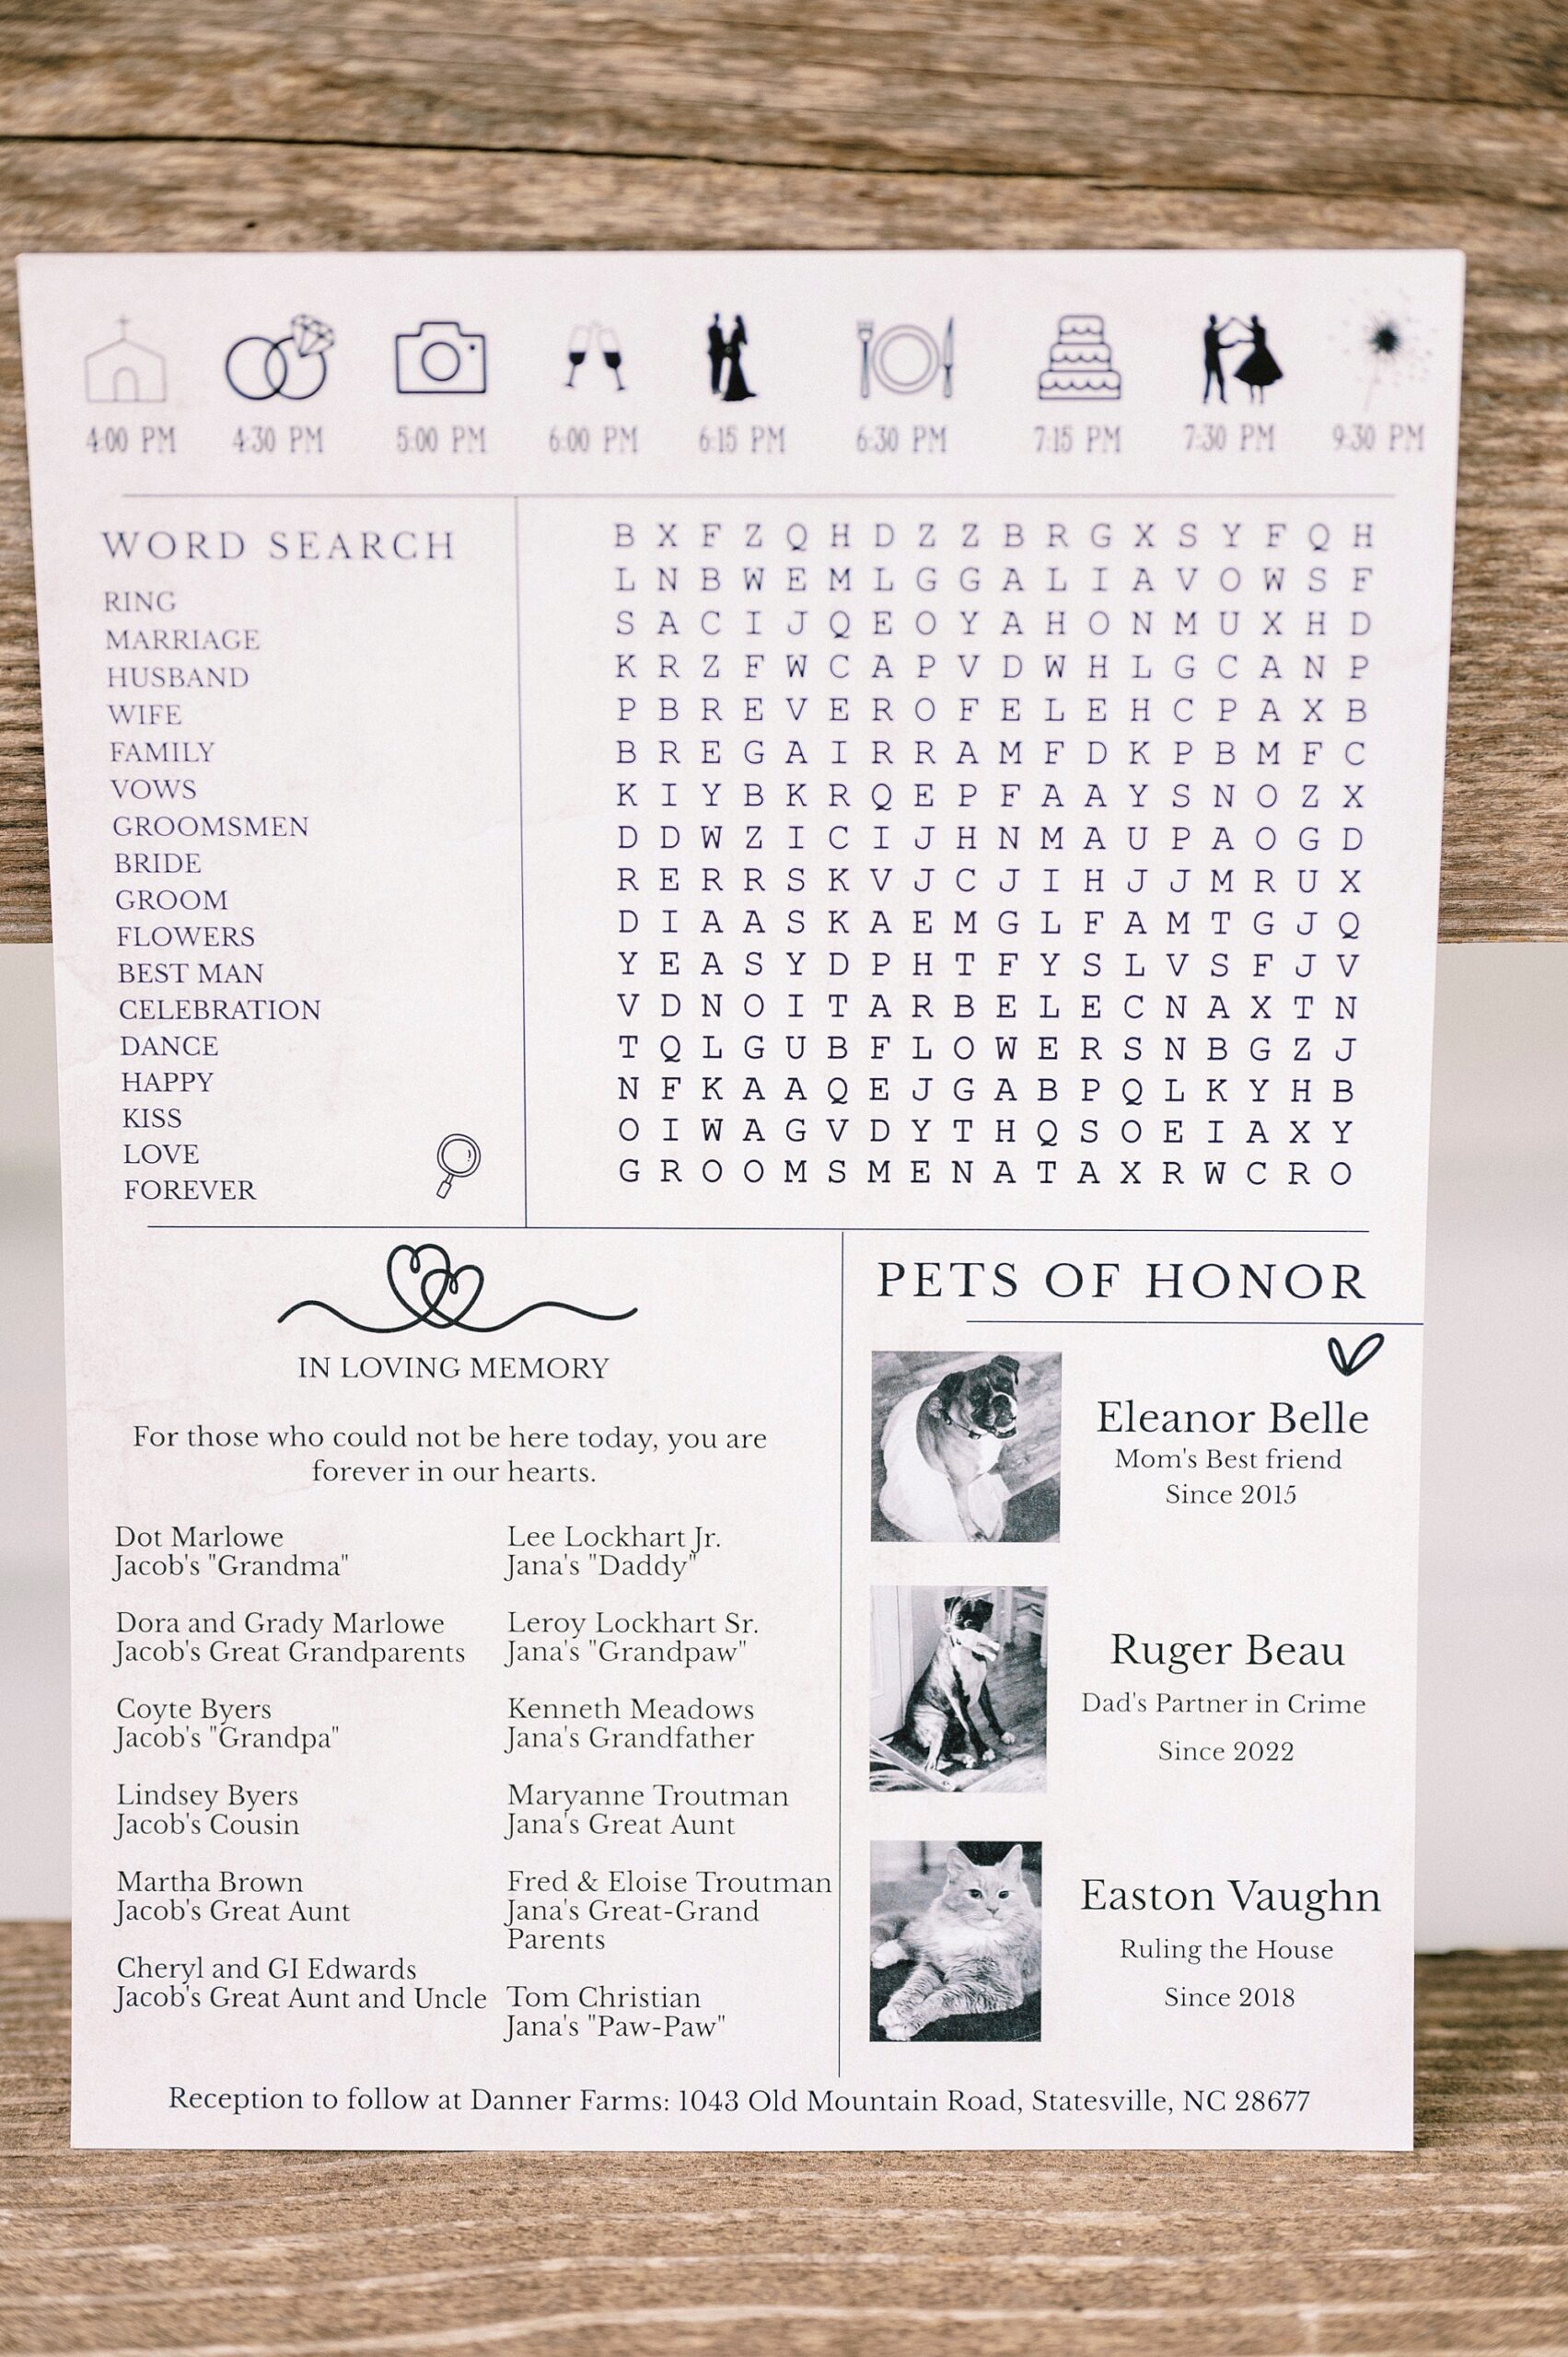 giant crossword for wedding reception in North Carolina